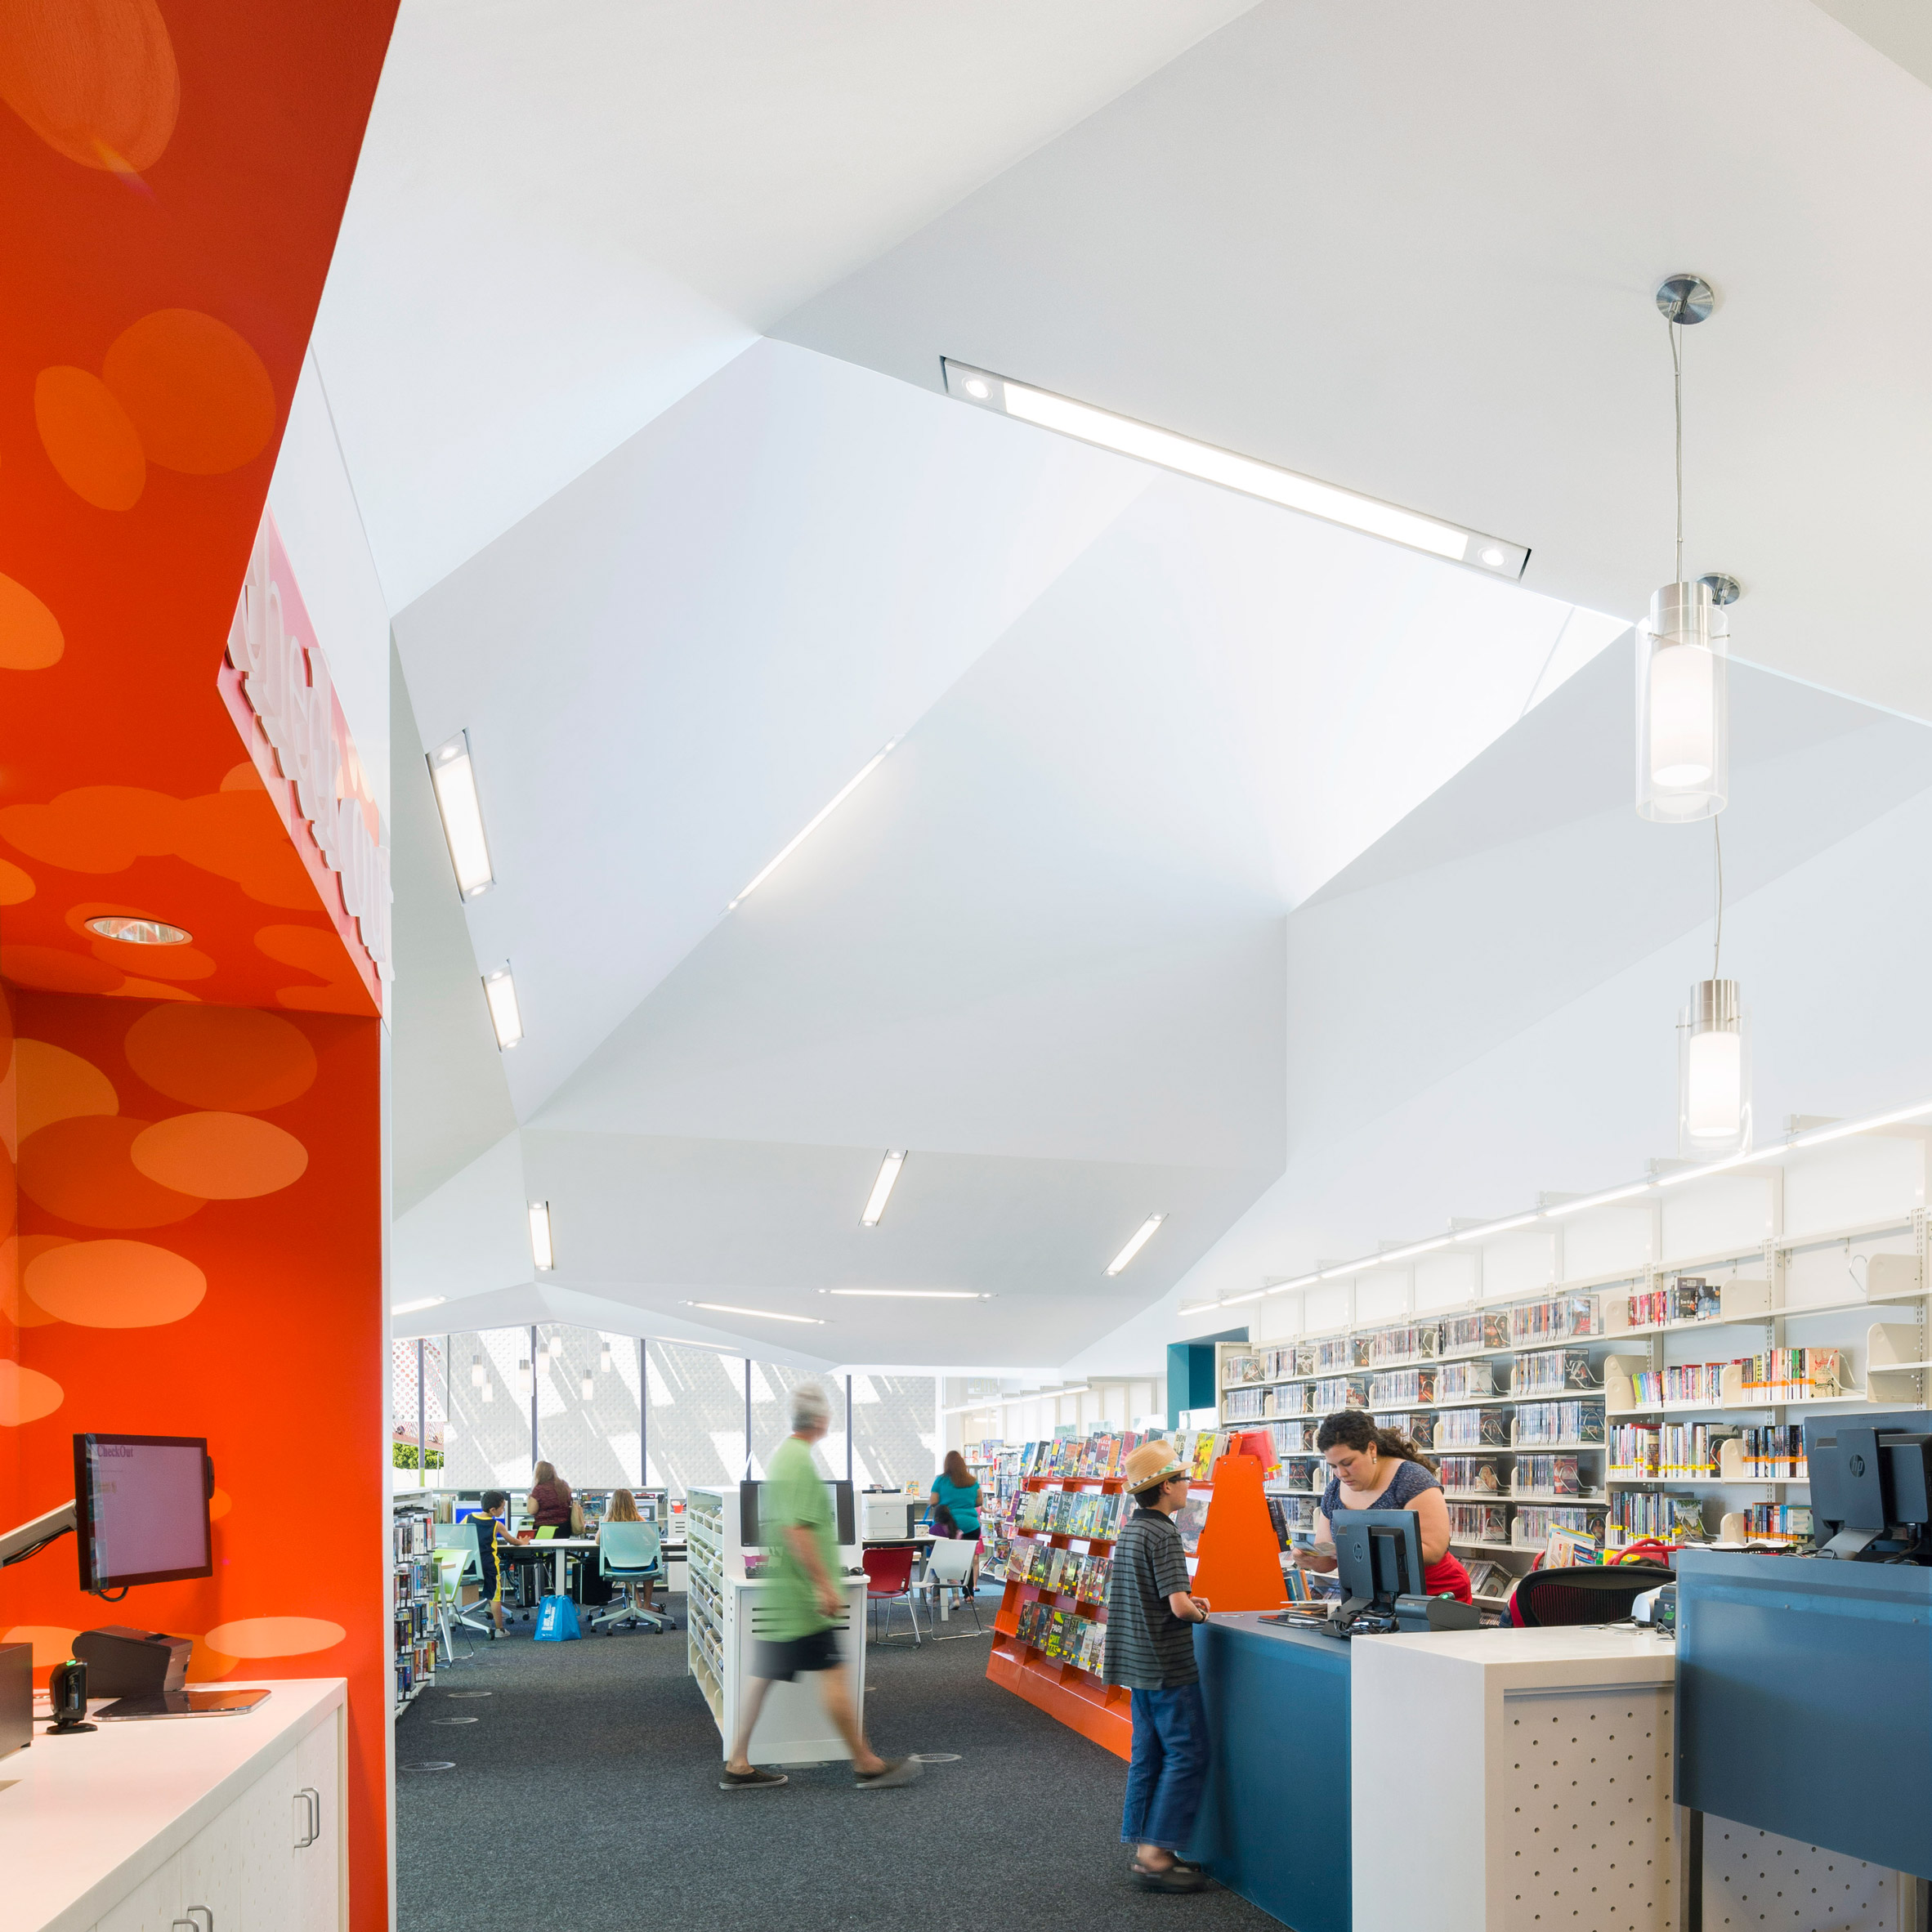 Pico Branch Library by KoningEizenberg